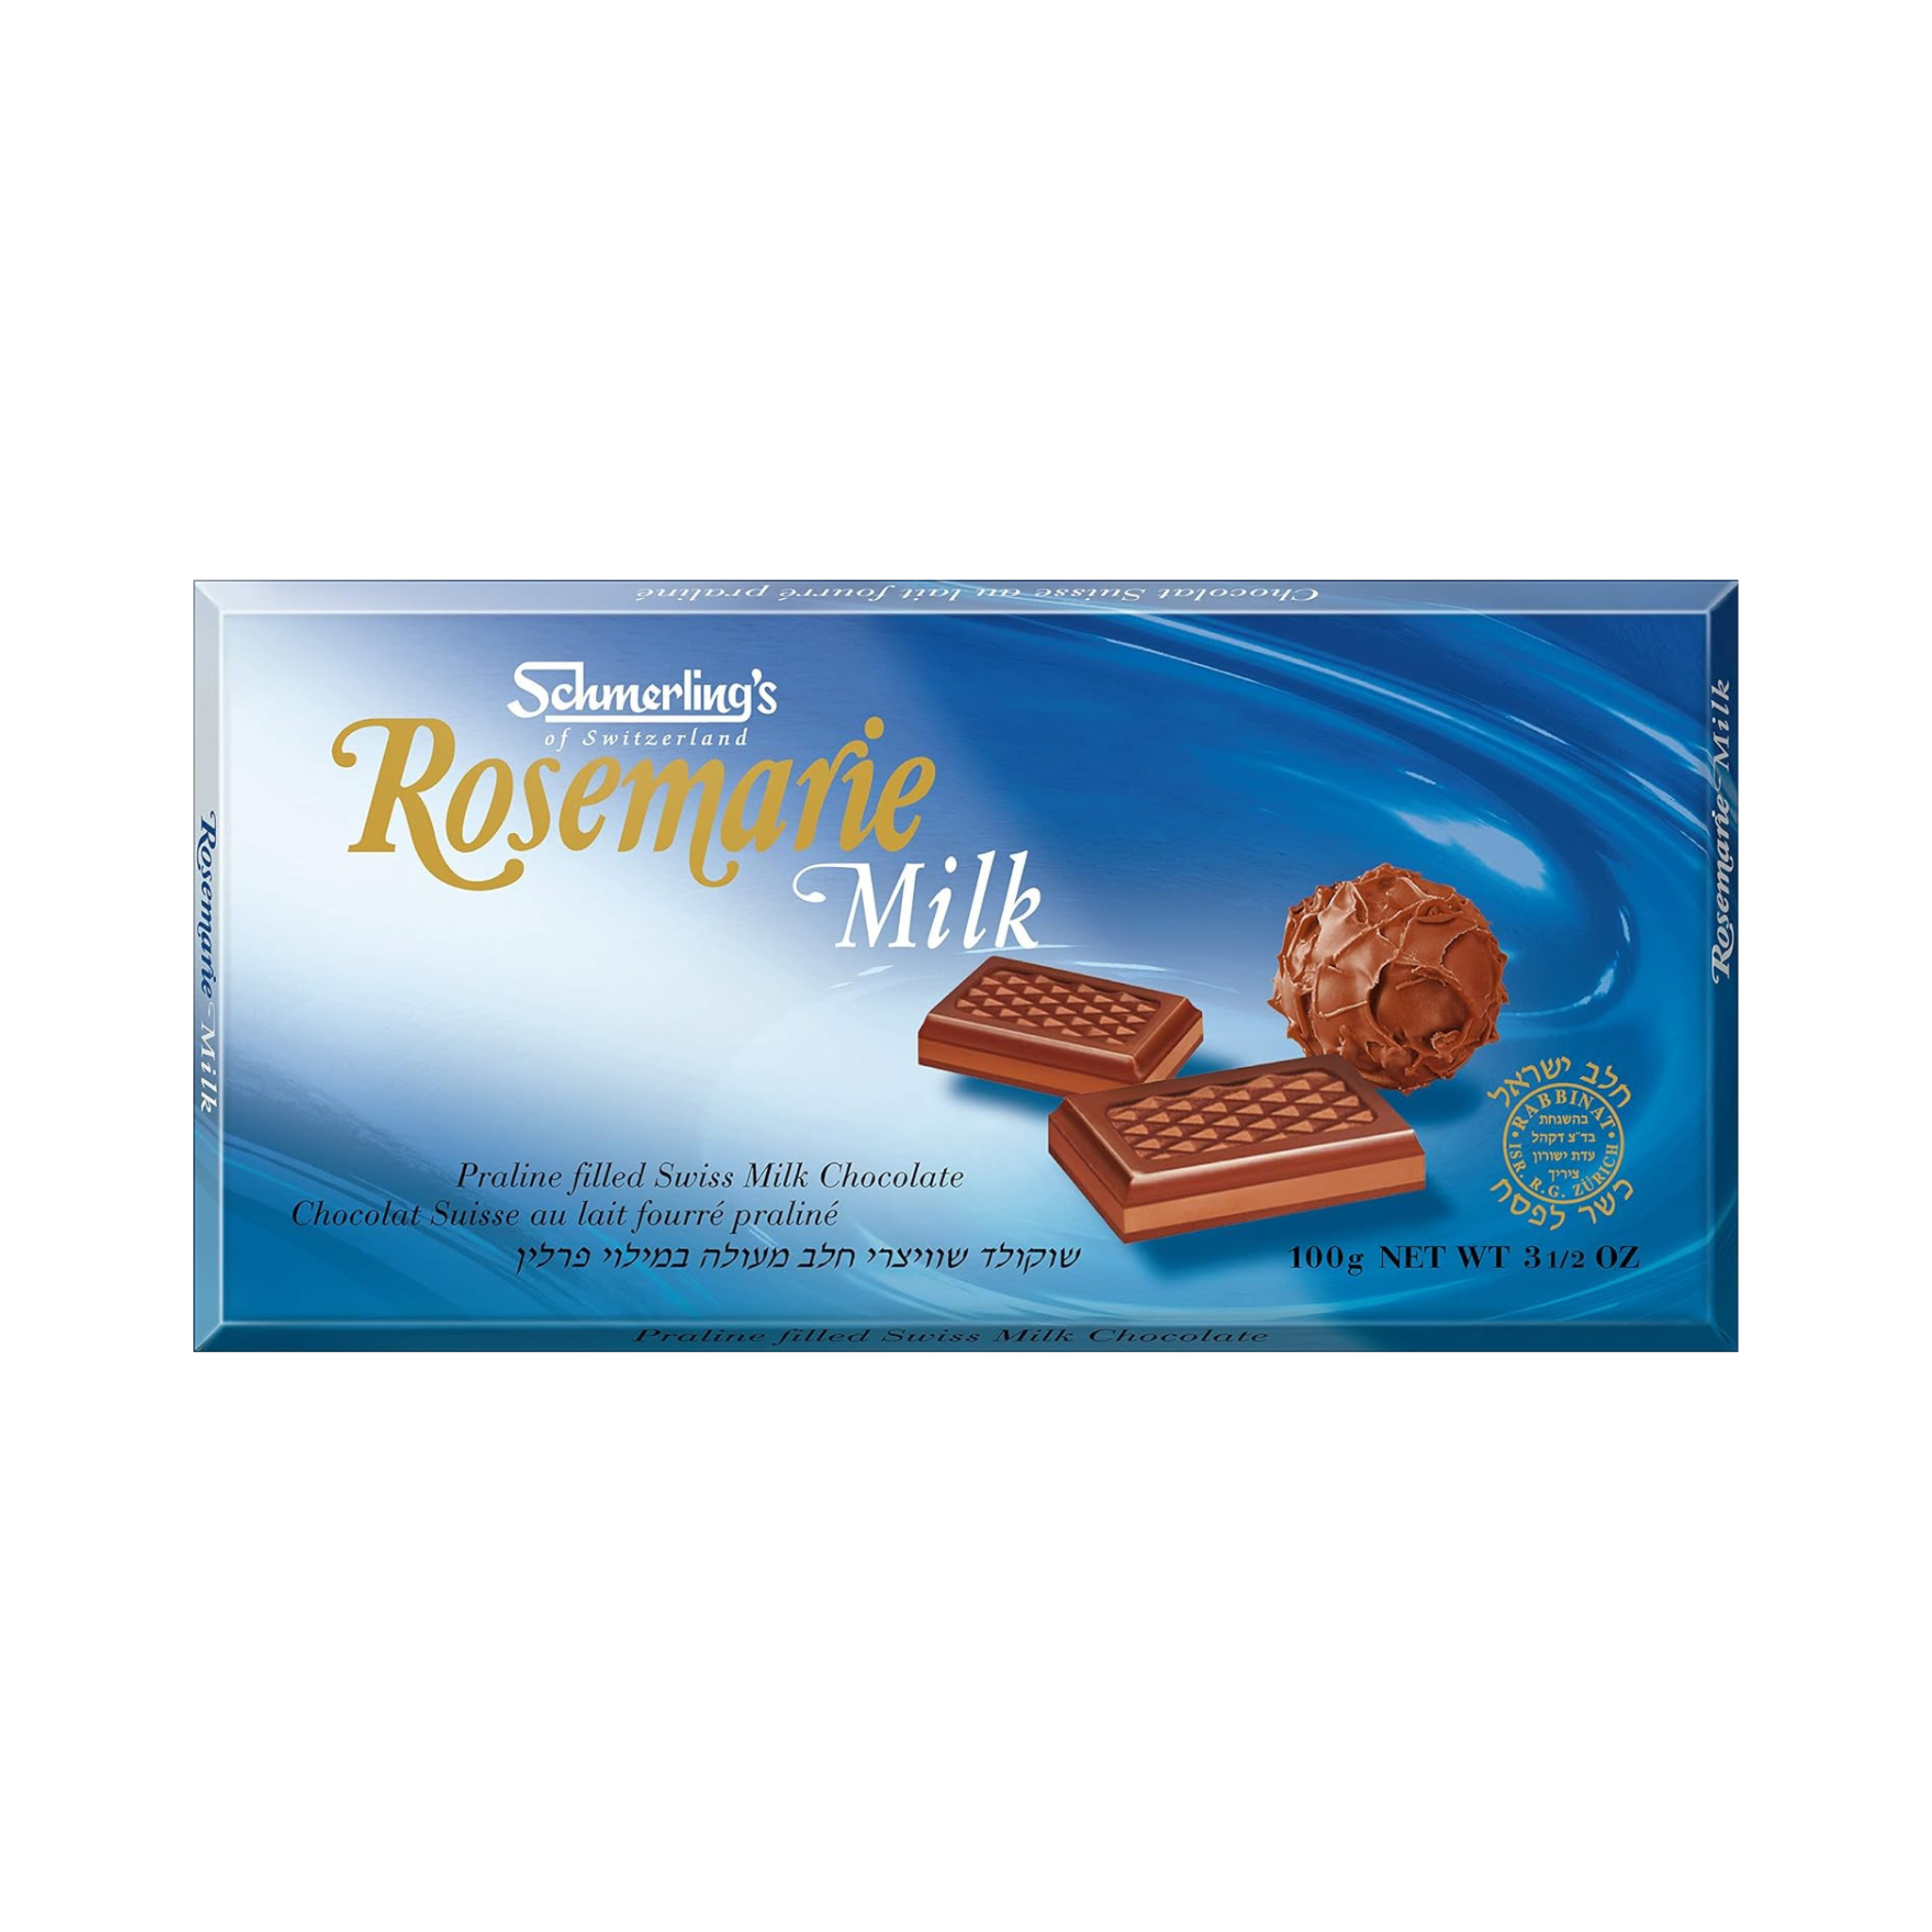 Schemerling's Rosemarie Milk Chocolate Bars, Kosher For Passover, 5 Pack